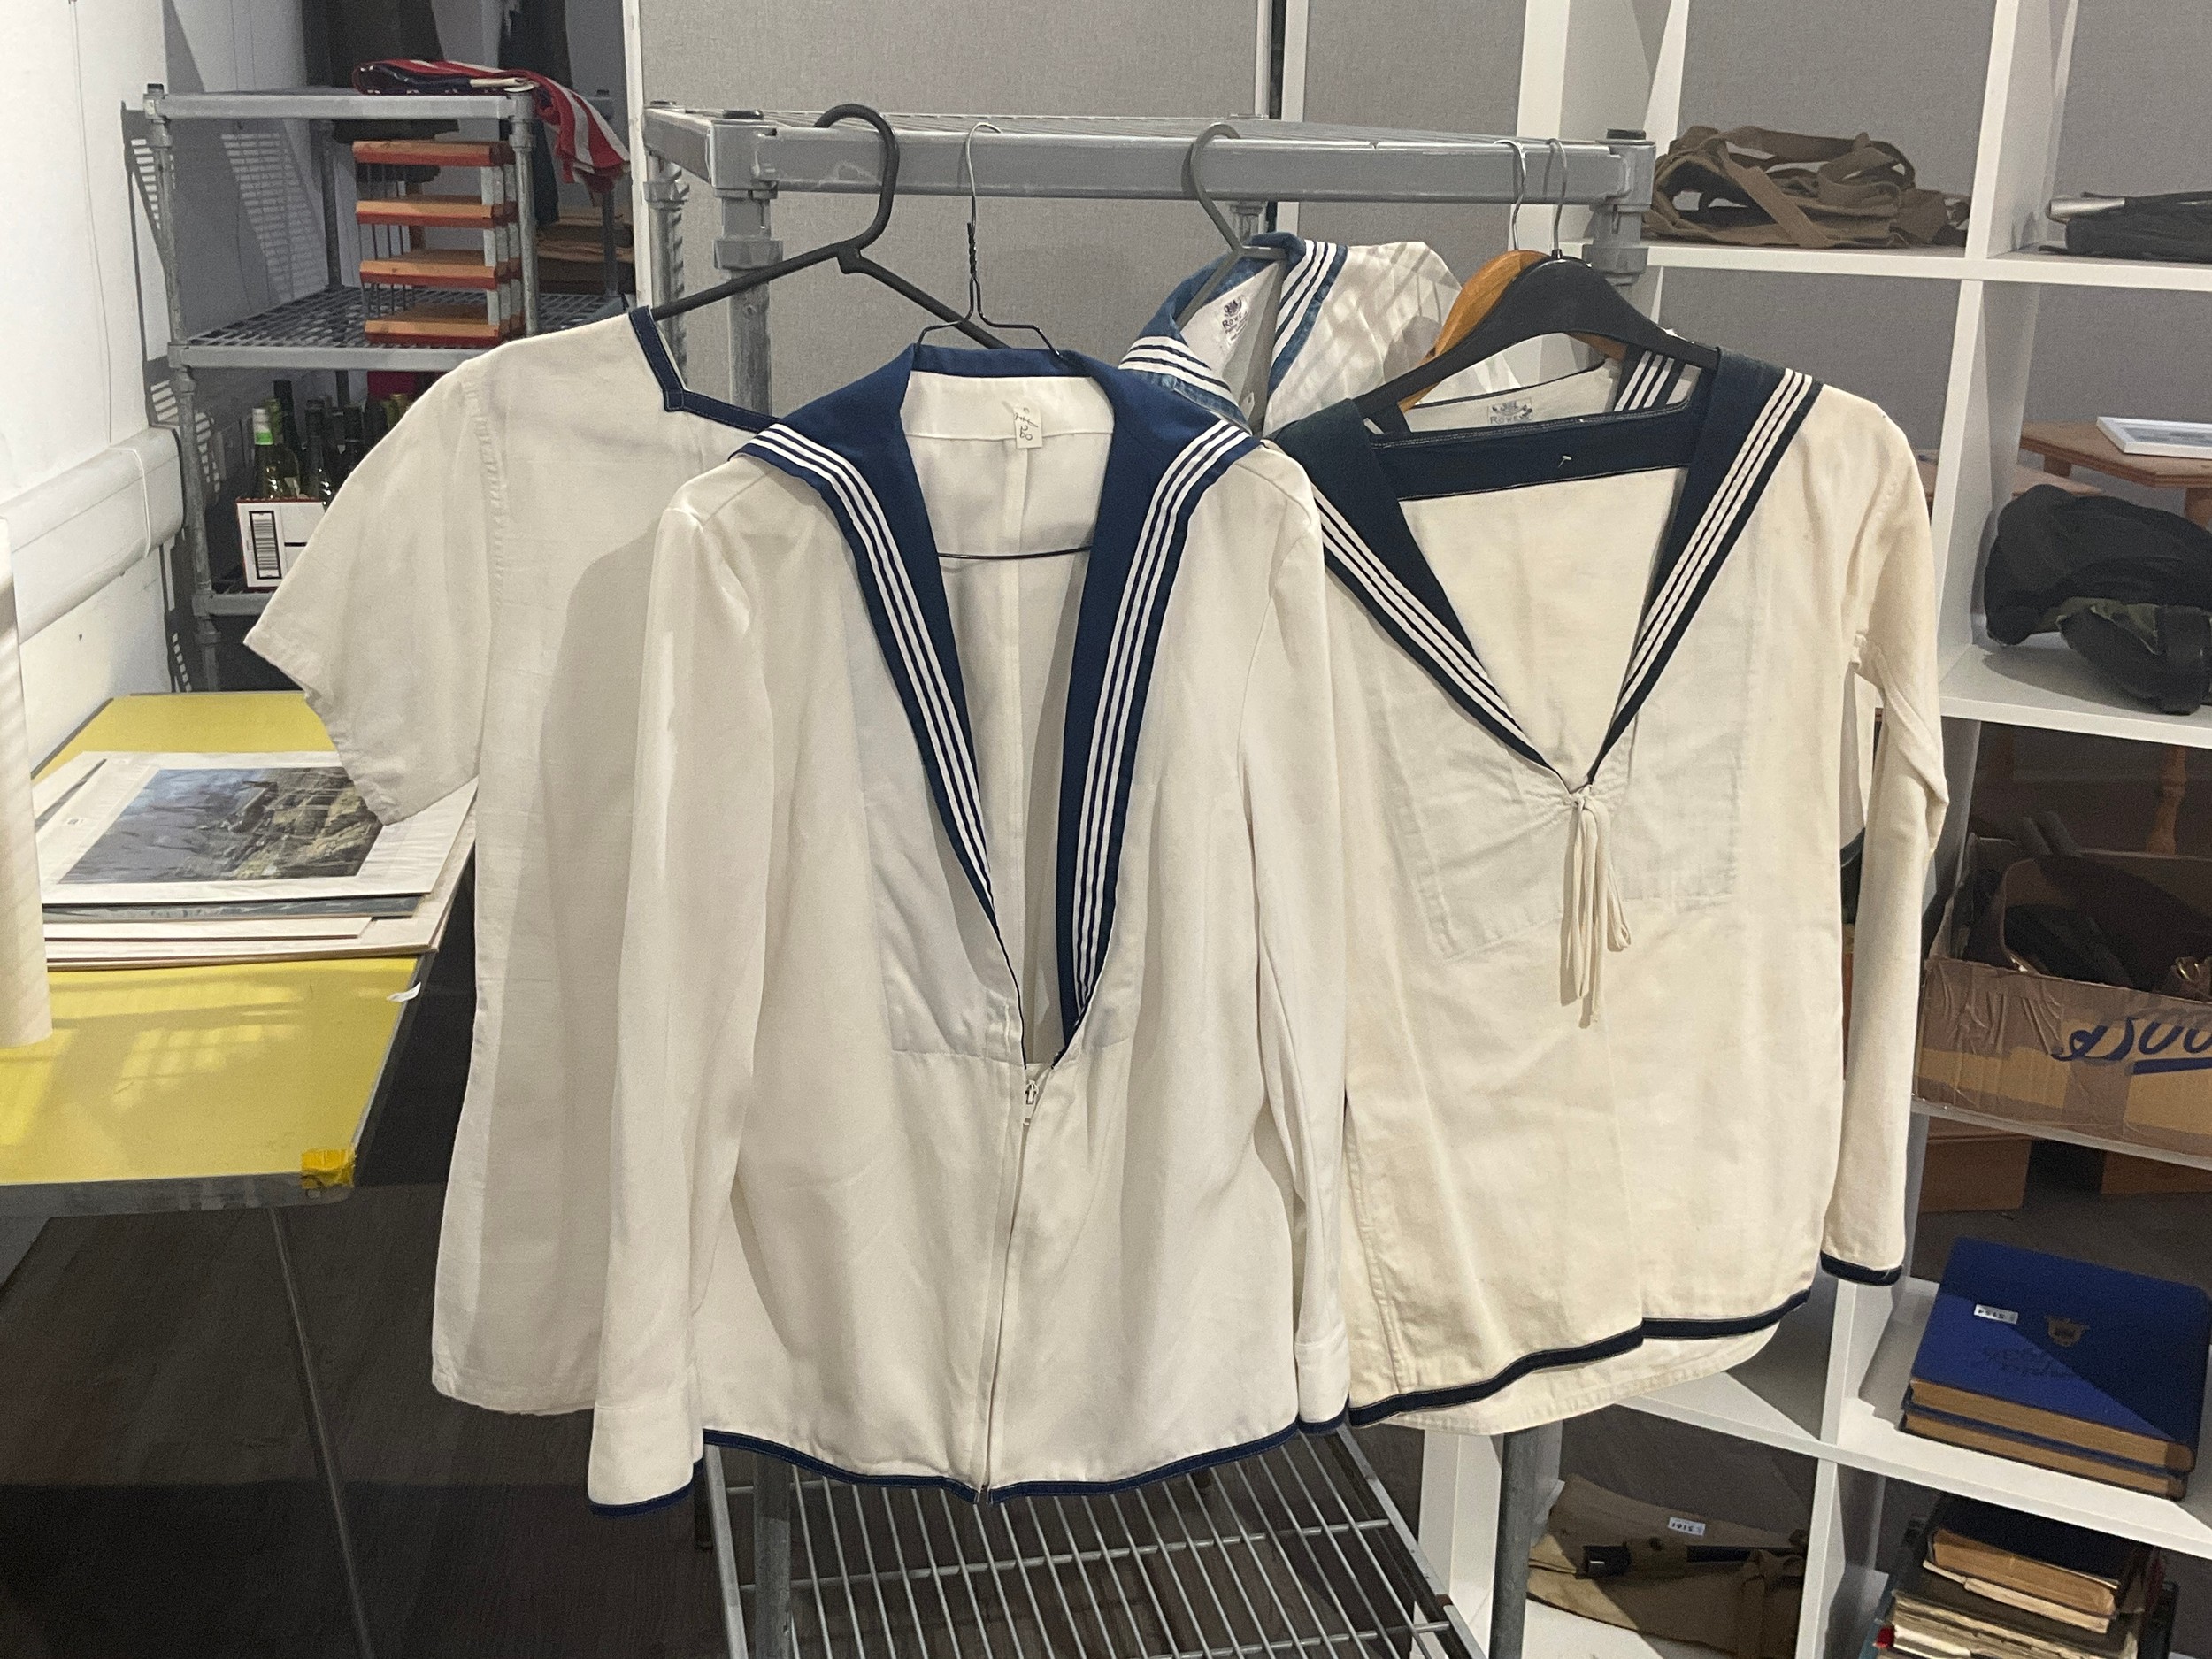 A quantity of sailor's white shirts